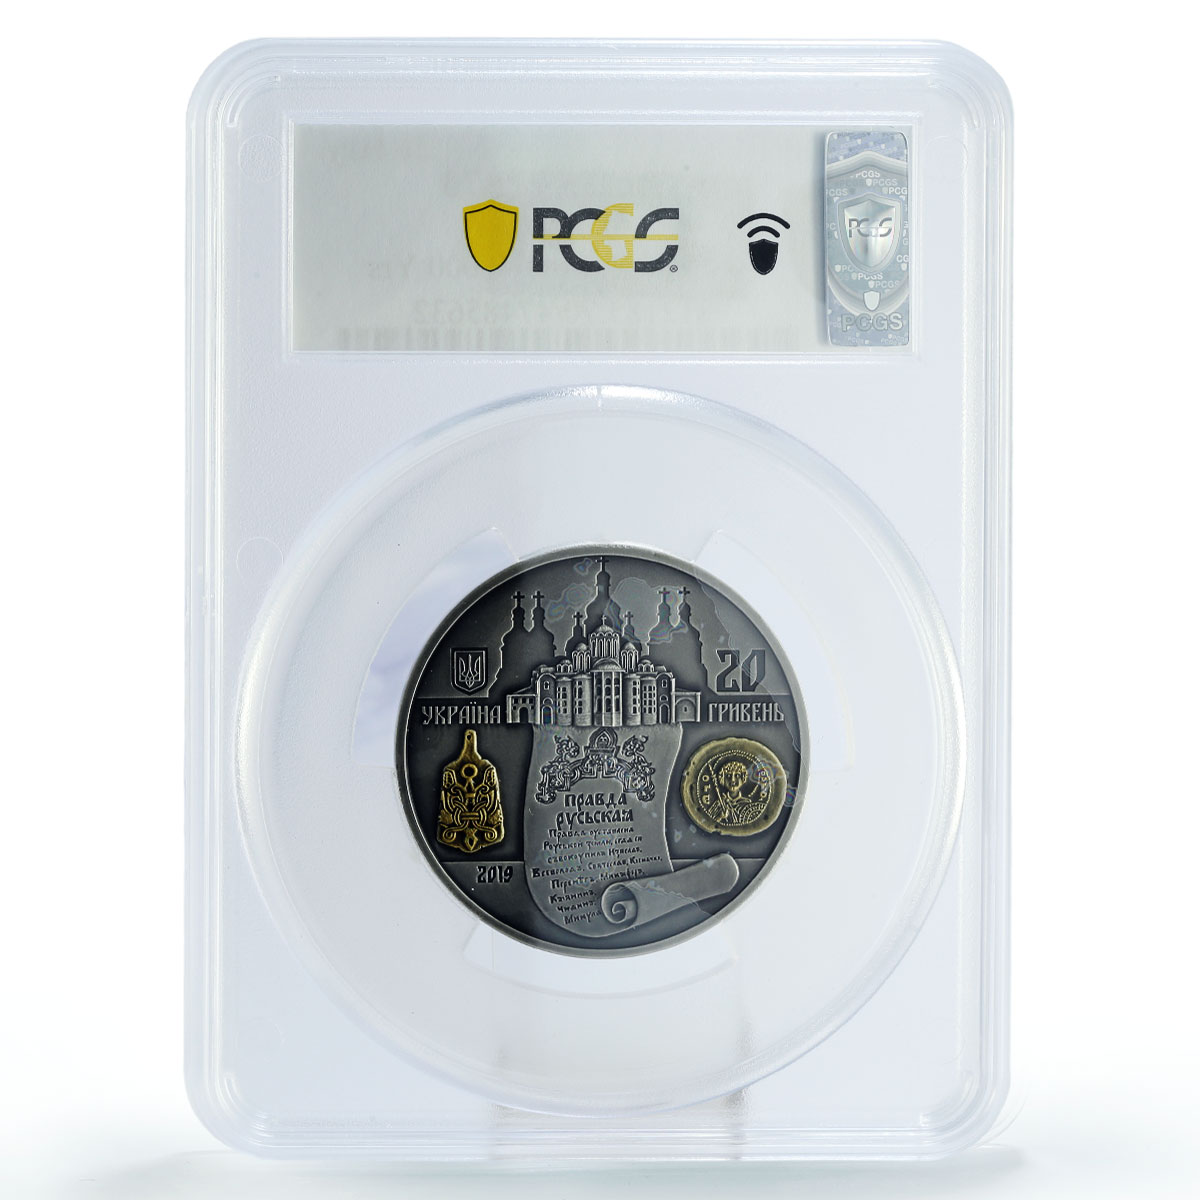 Ukraine 20 hryvnias Prince Yaroslav Rule Ruska Pravda MS70 PCGS silver coin 2019